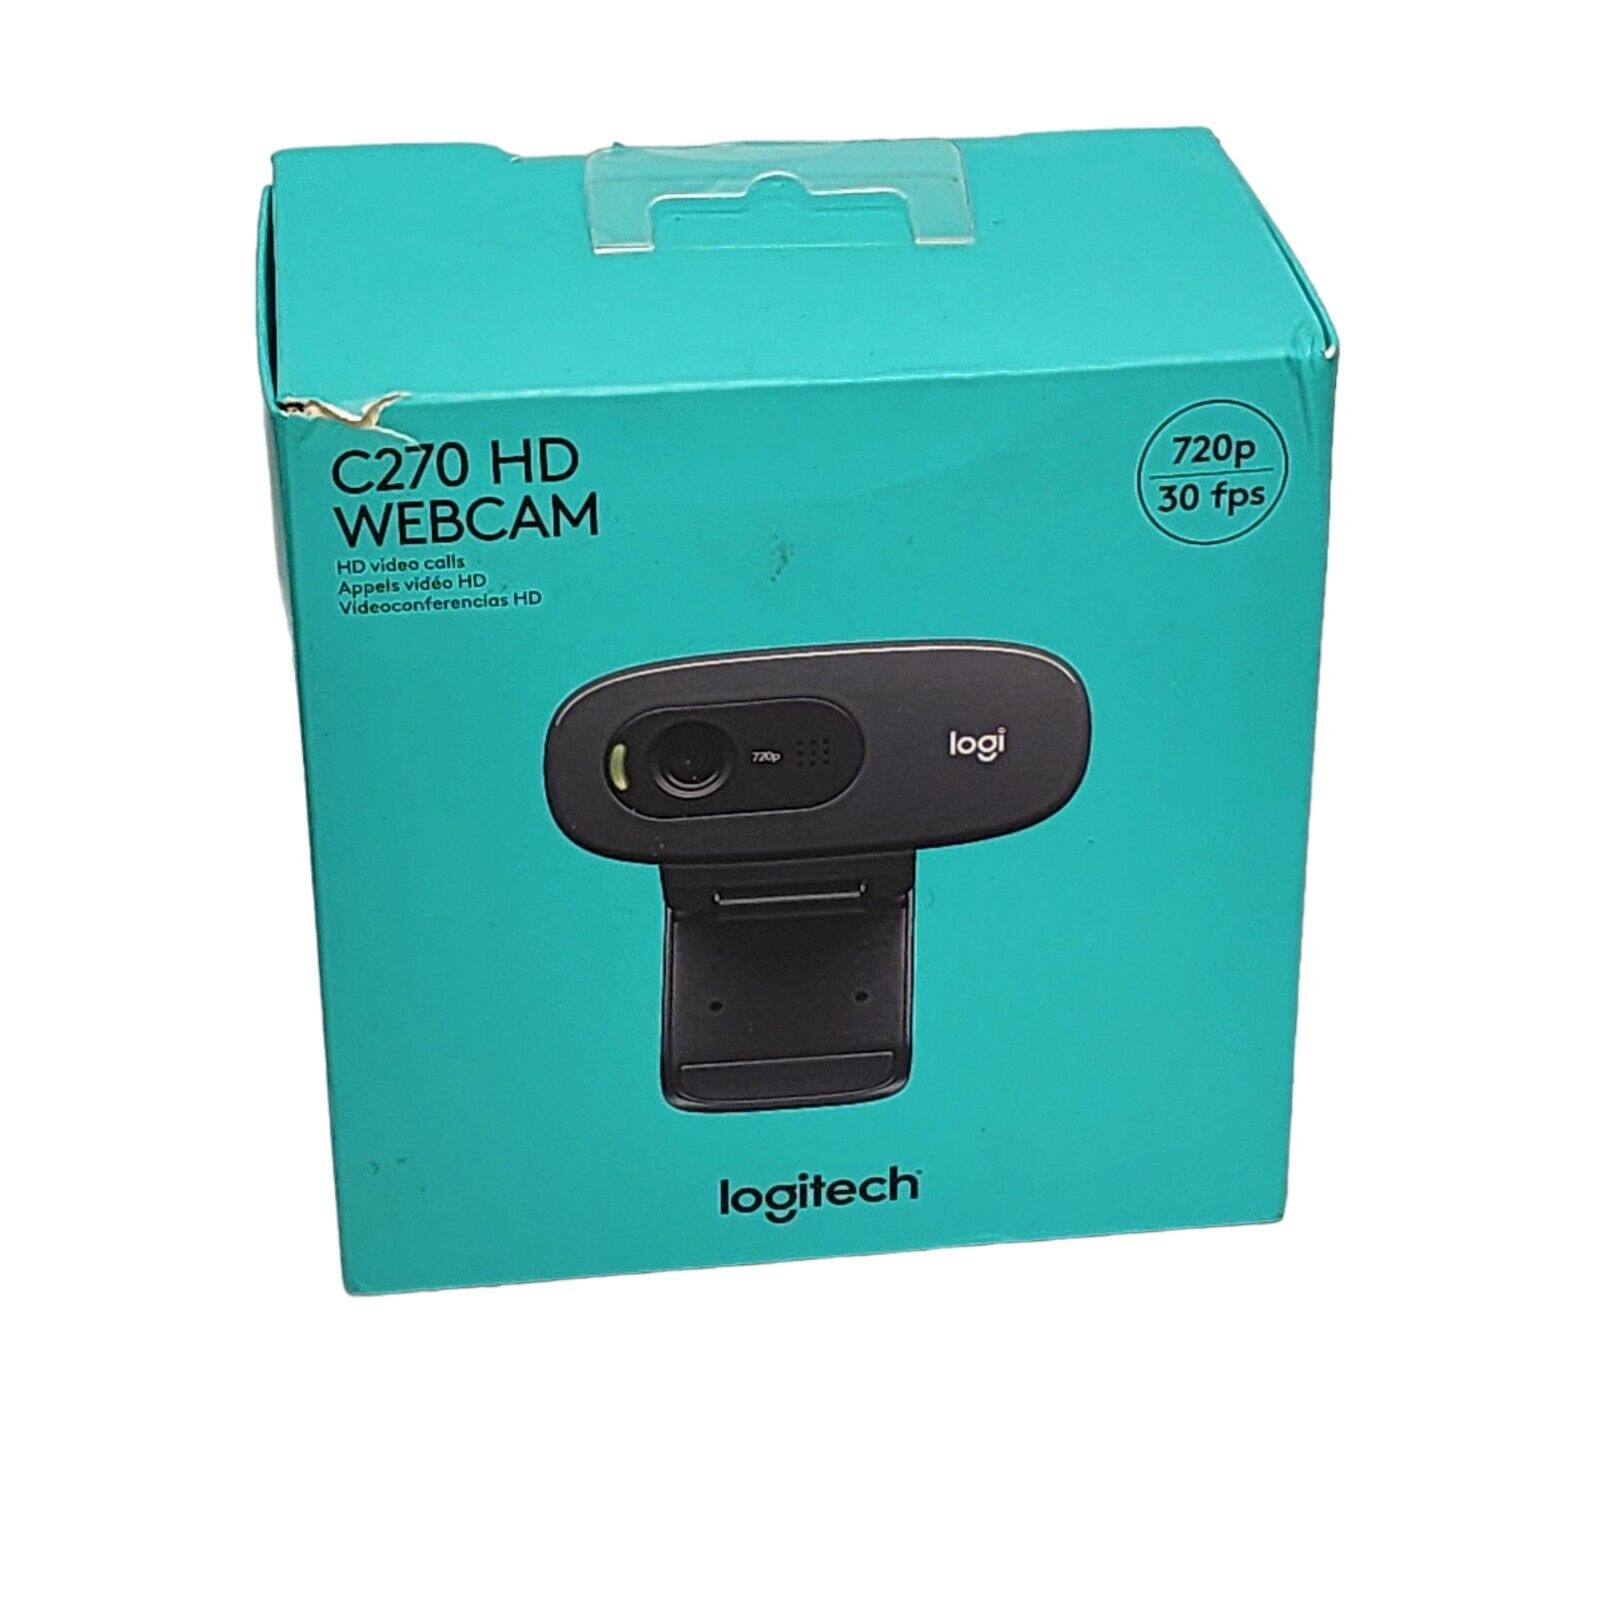 Logitech C270 HD Webcam Video Calls High Definition 720p Built-In Mic BRAND NEW